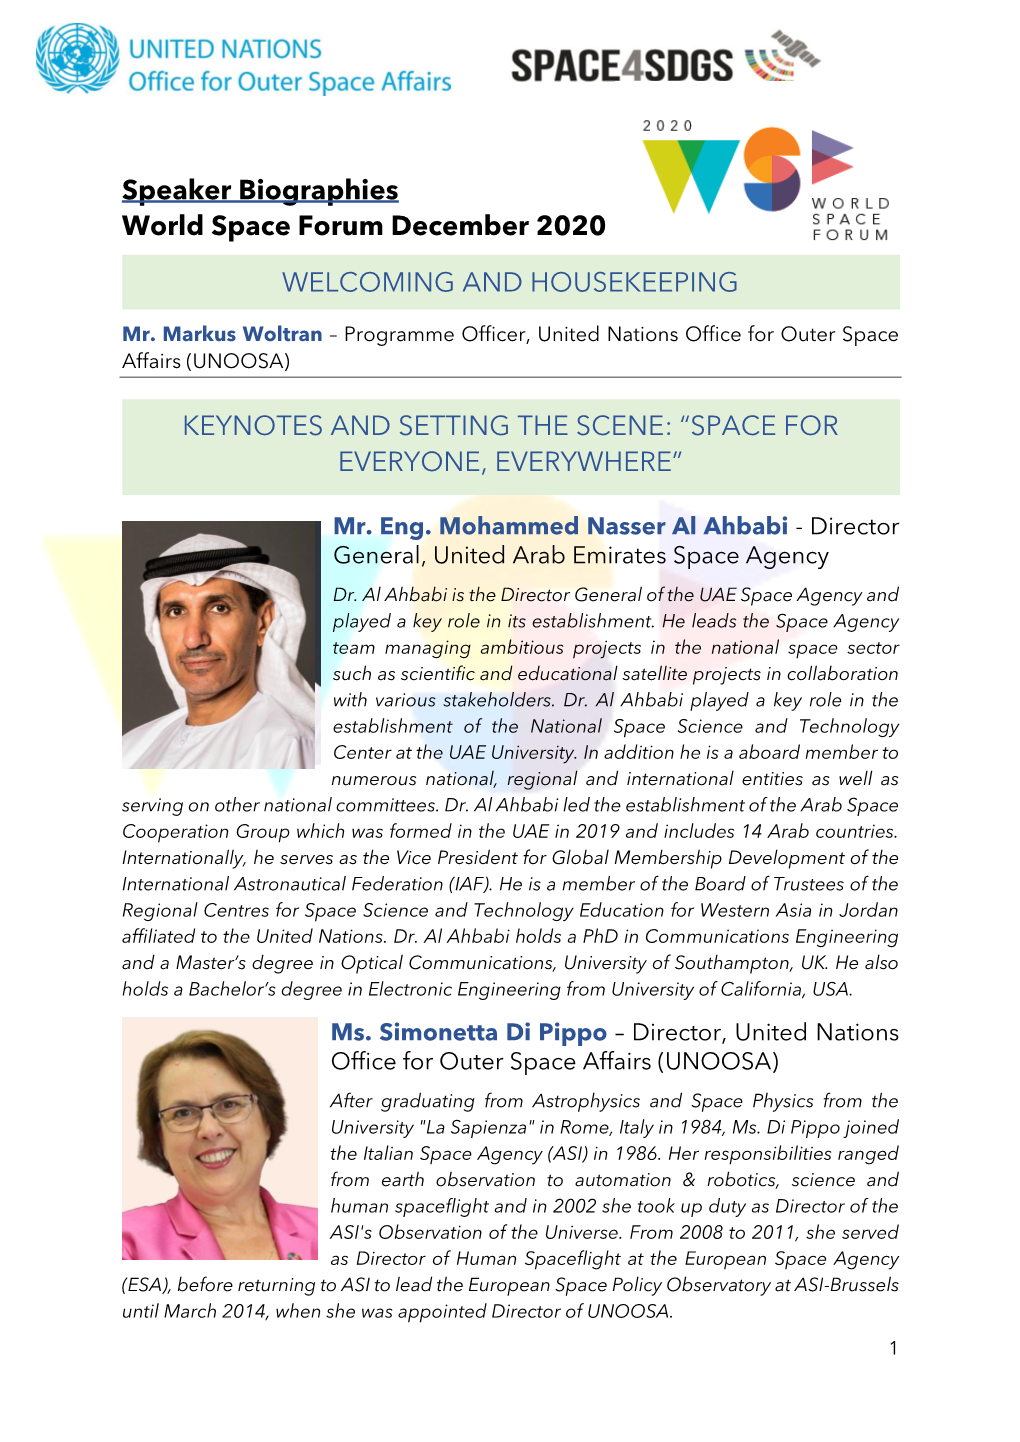 Speaker Biographies World Space Forum December 2020